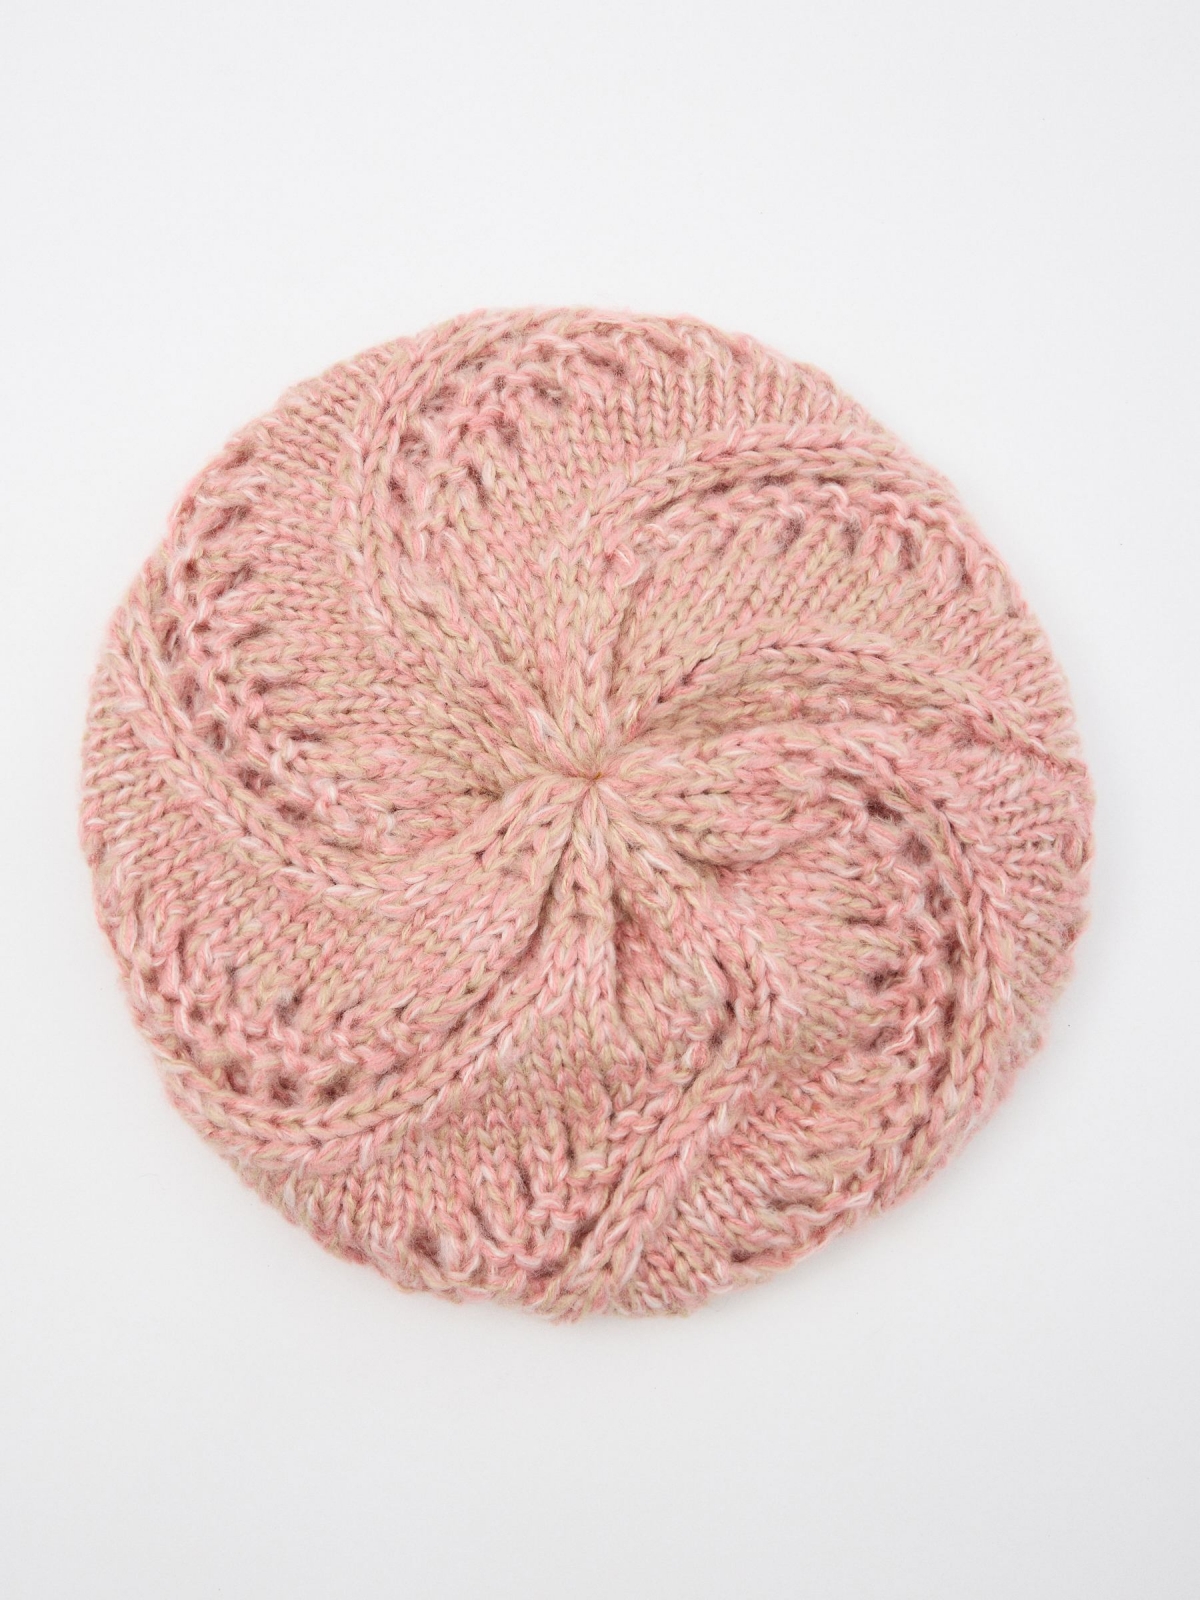 Coarse yarn beret in pink tones